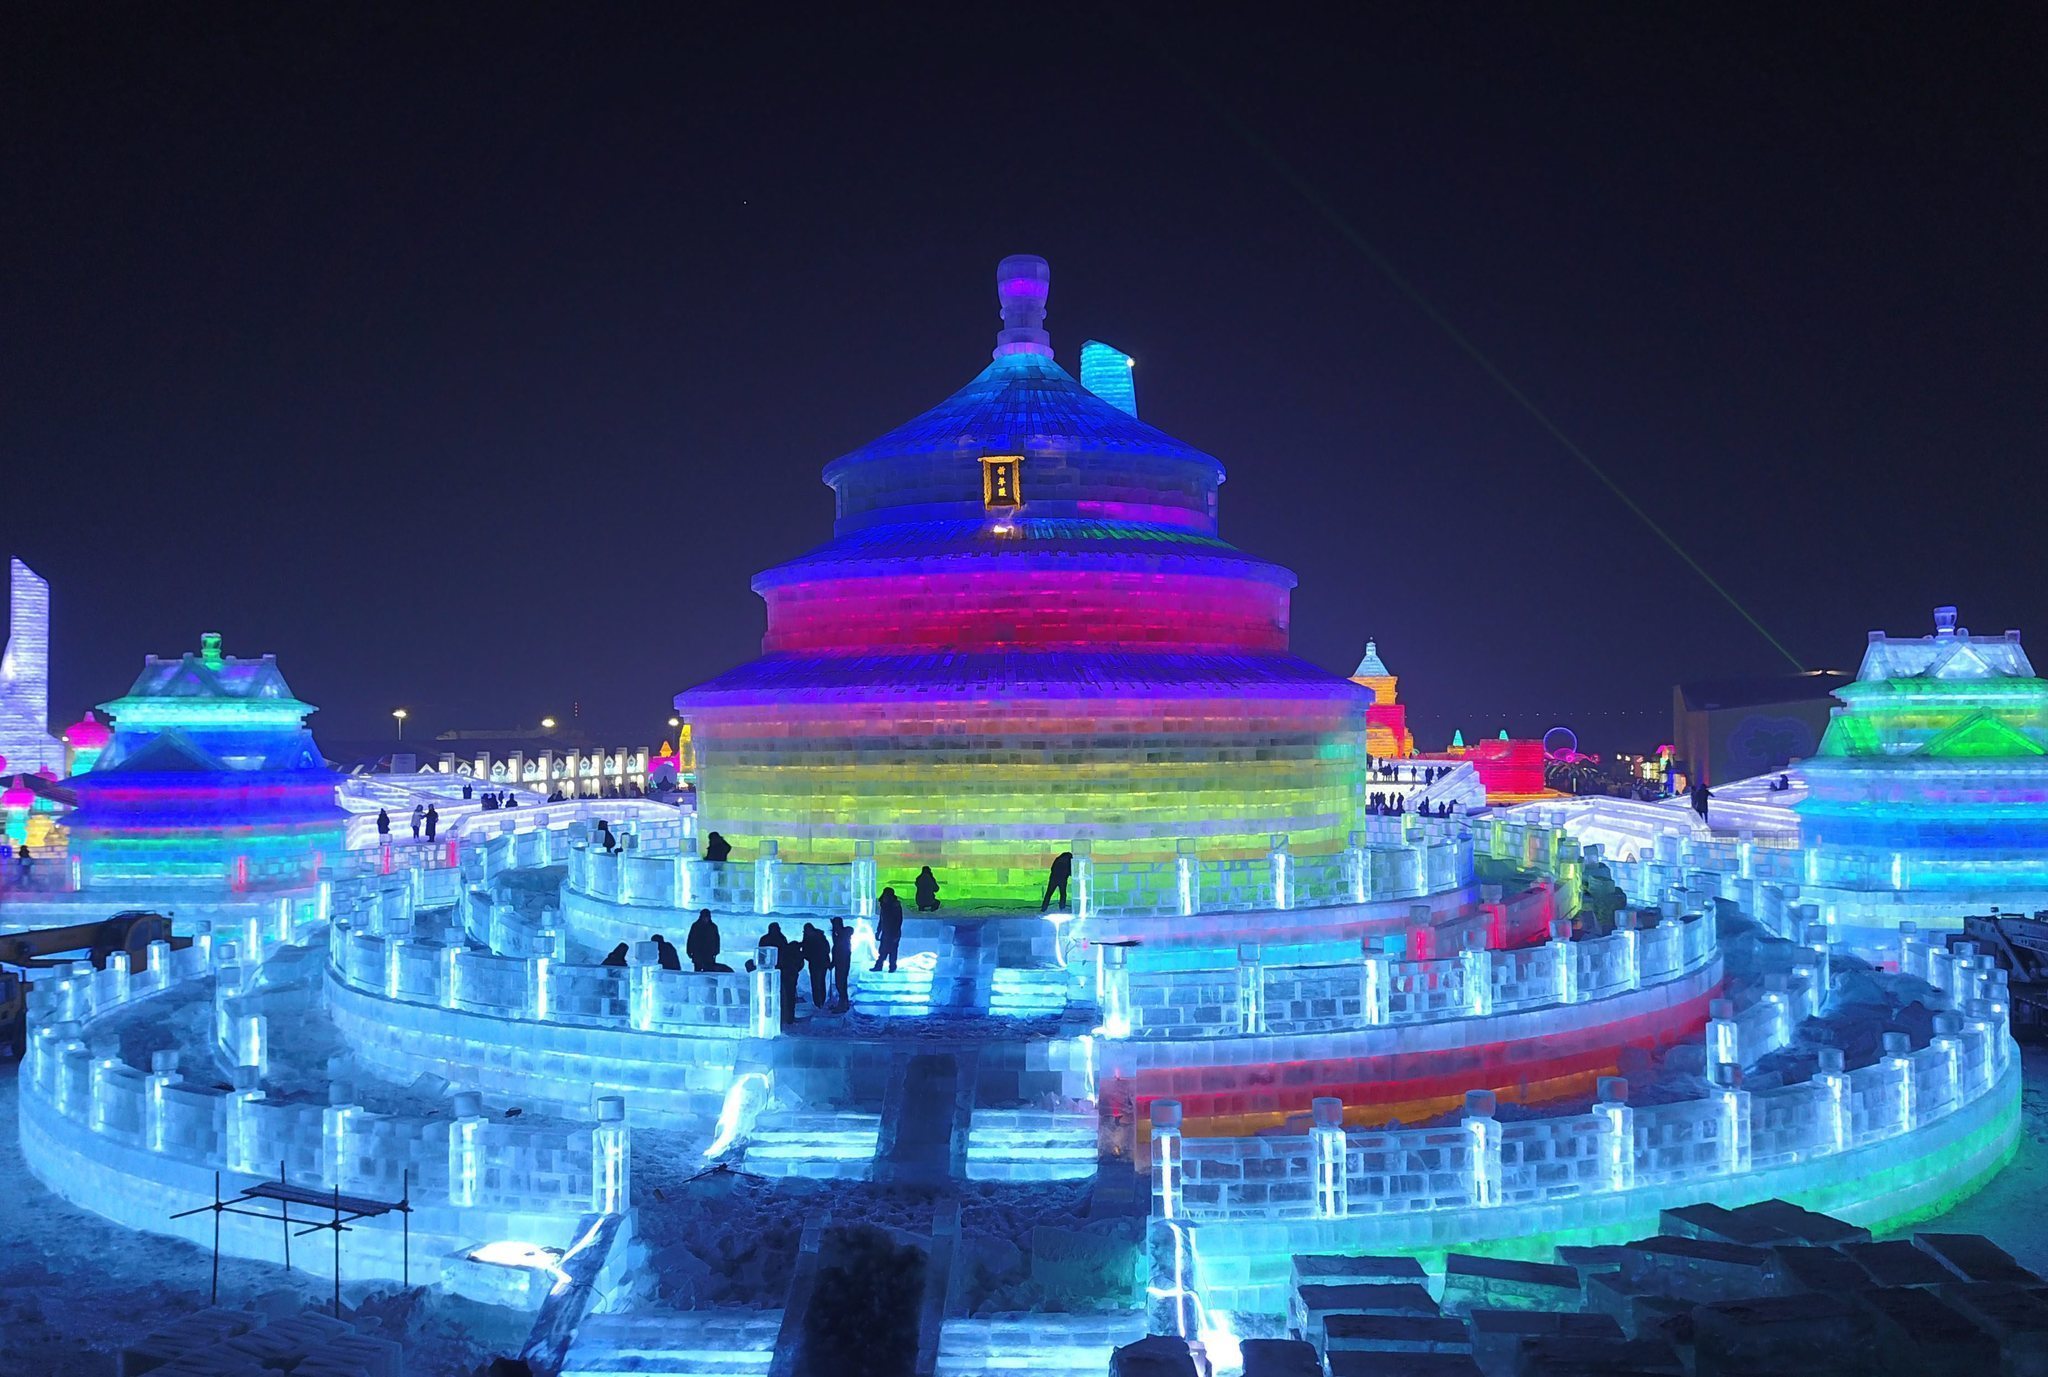 Ледовое г. Харбин Китай ледяной город 2020. Харбин дворец льда. Фестиваль ледяных скульптур в Харбине. Харбин город изо льда.